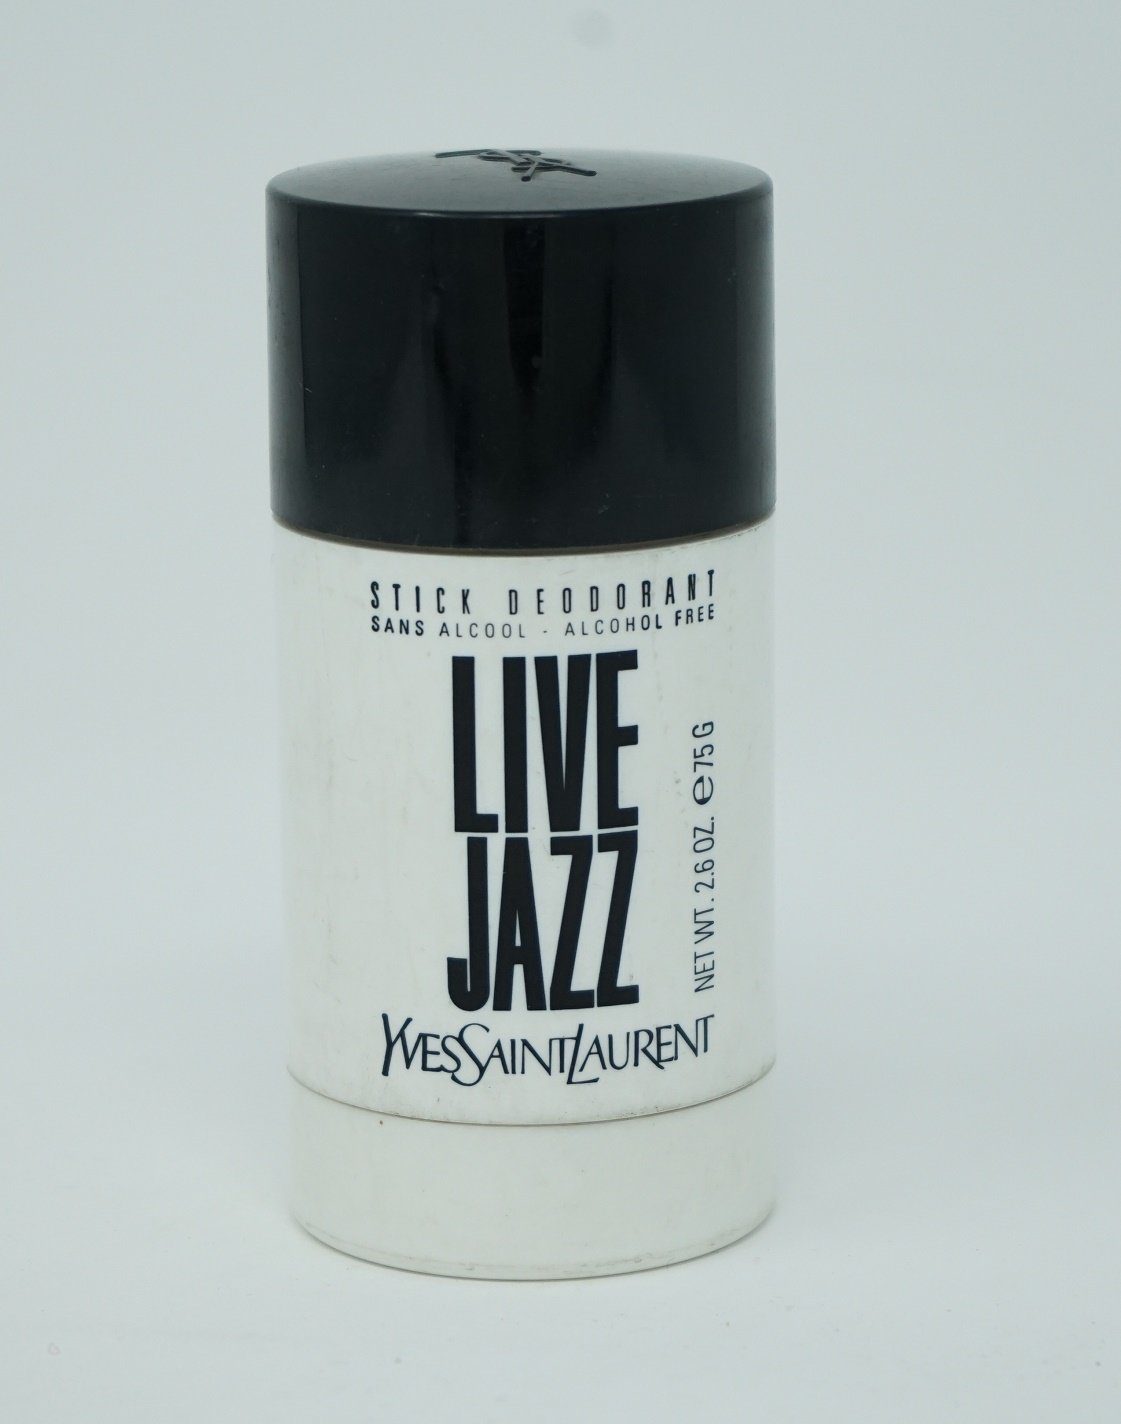 YVES SAINT LAURENT Deo-Stift Yves Saint Laurent Live Jazz Deodorant Stick 75g